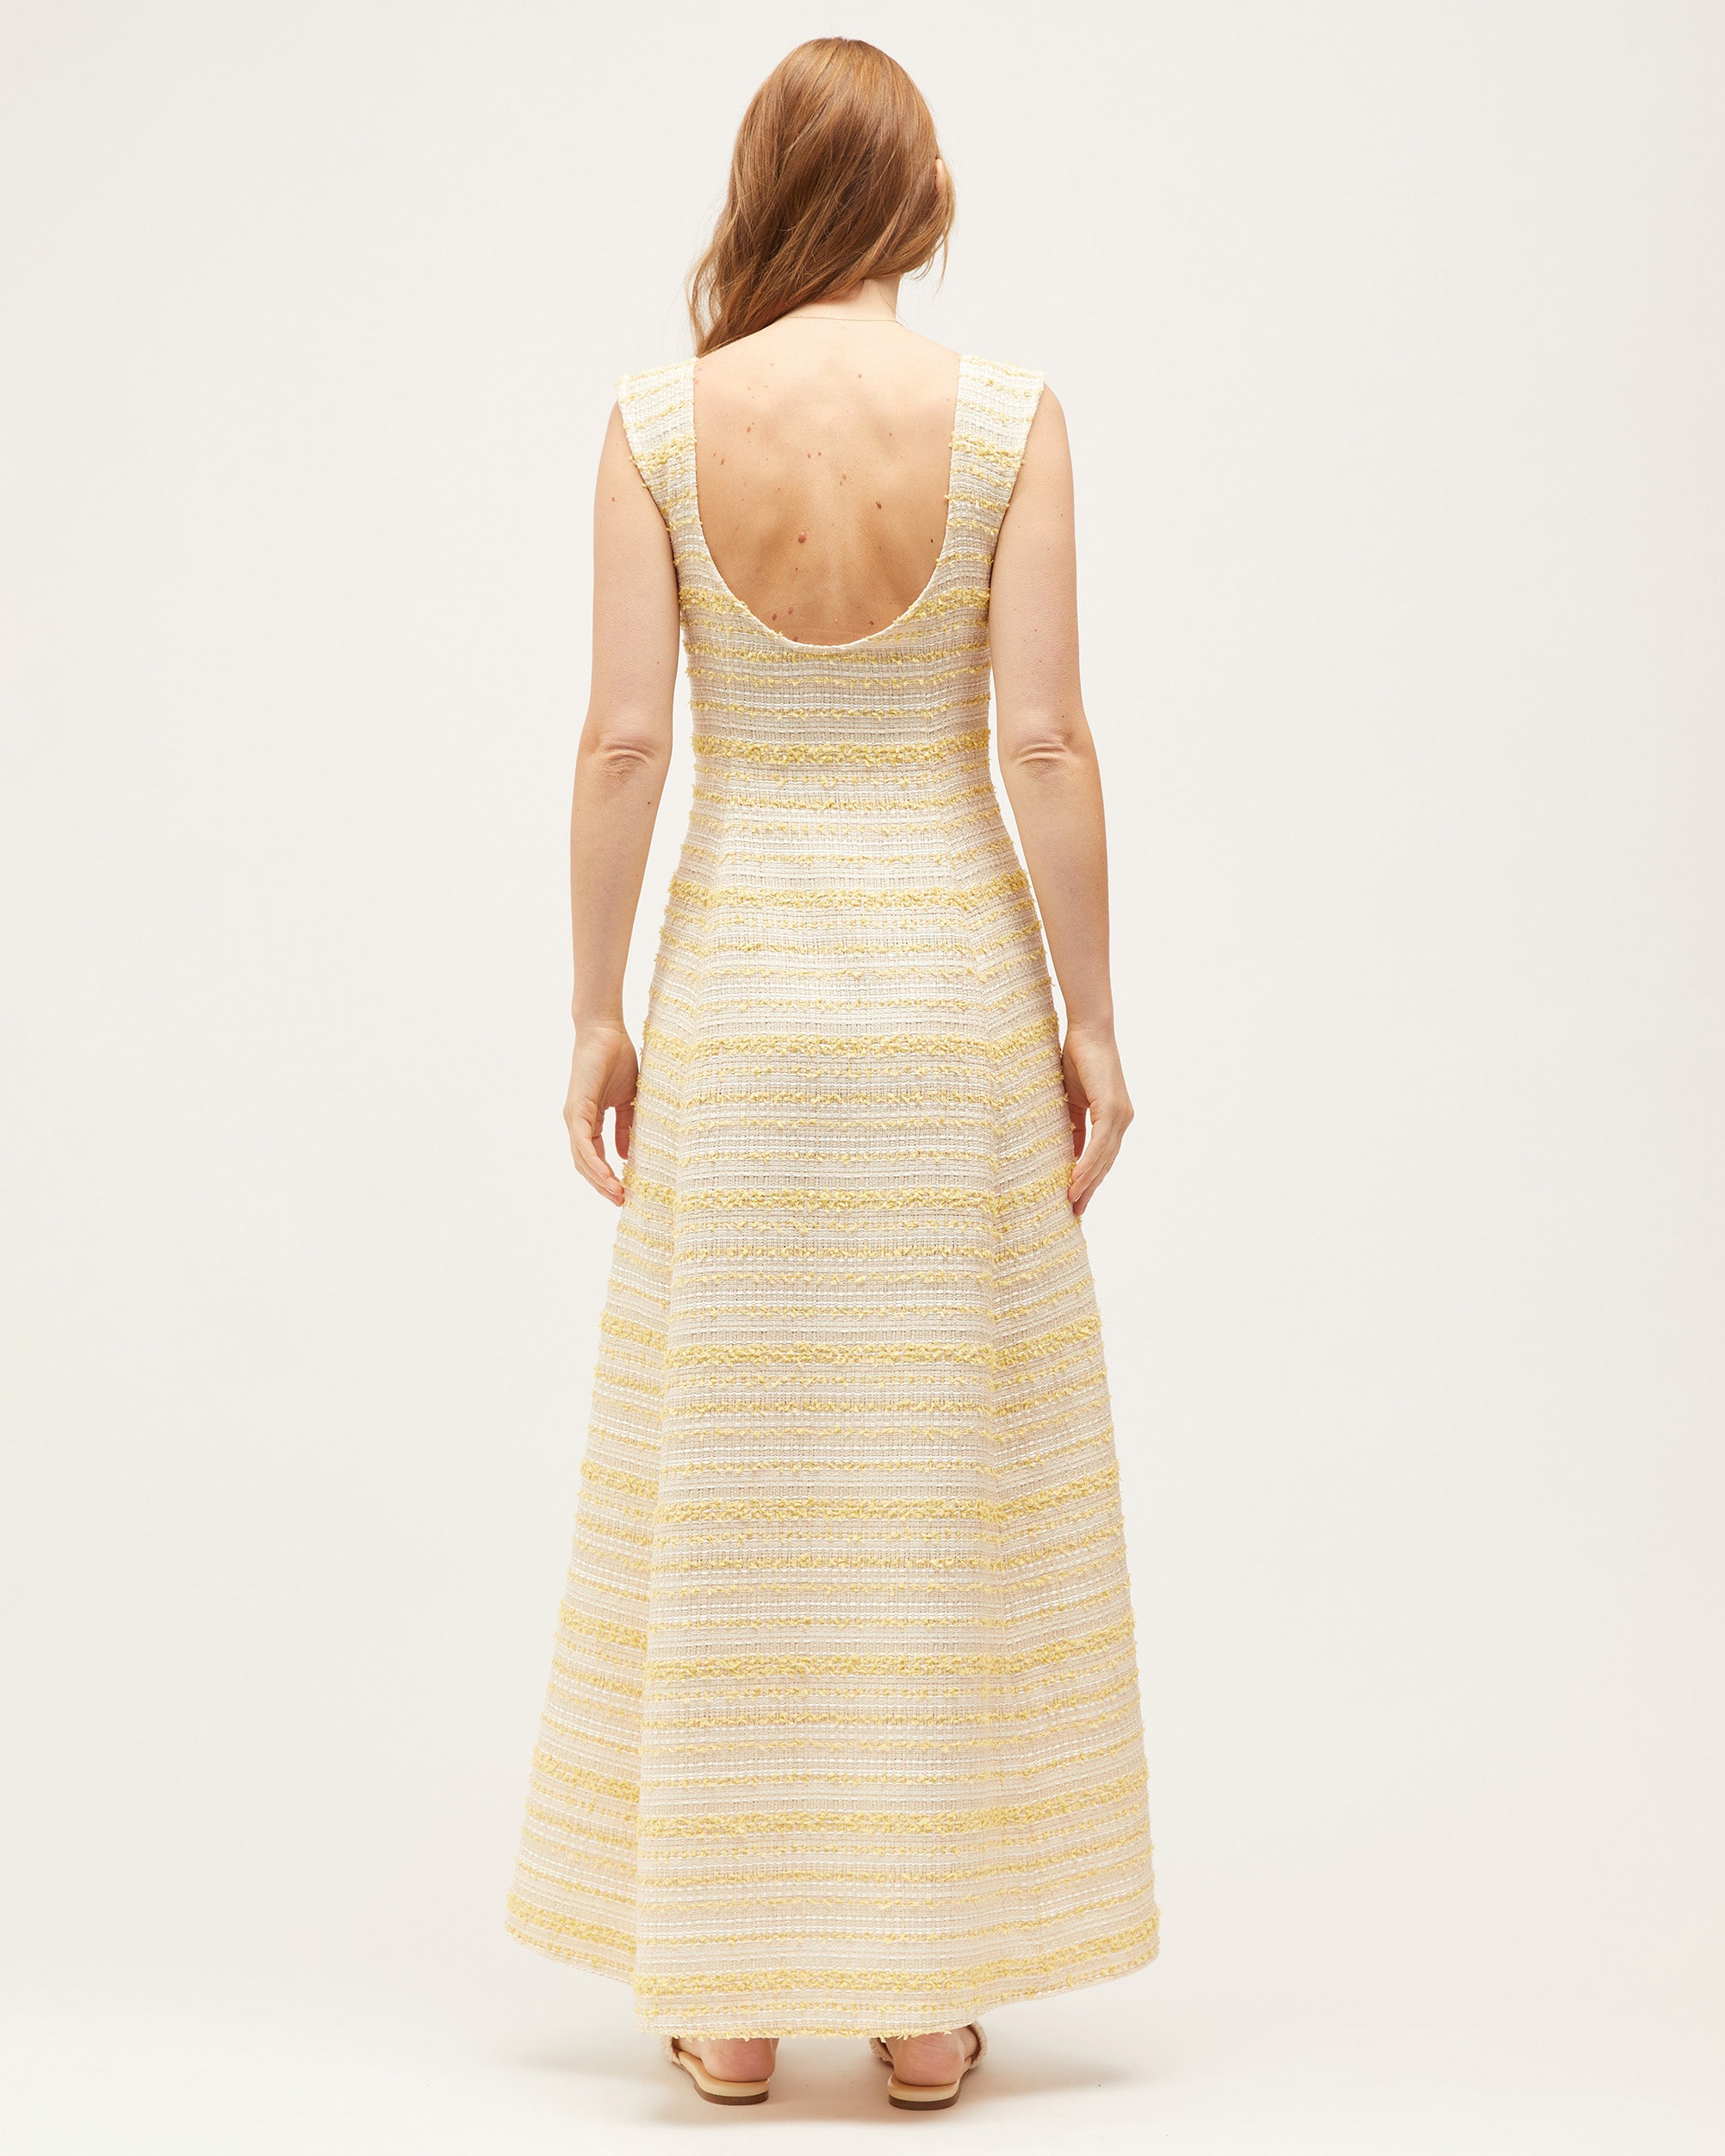 Naia Dress | Butter $690